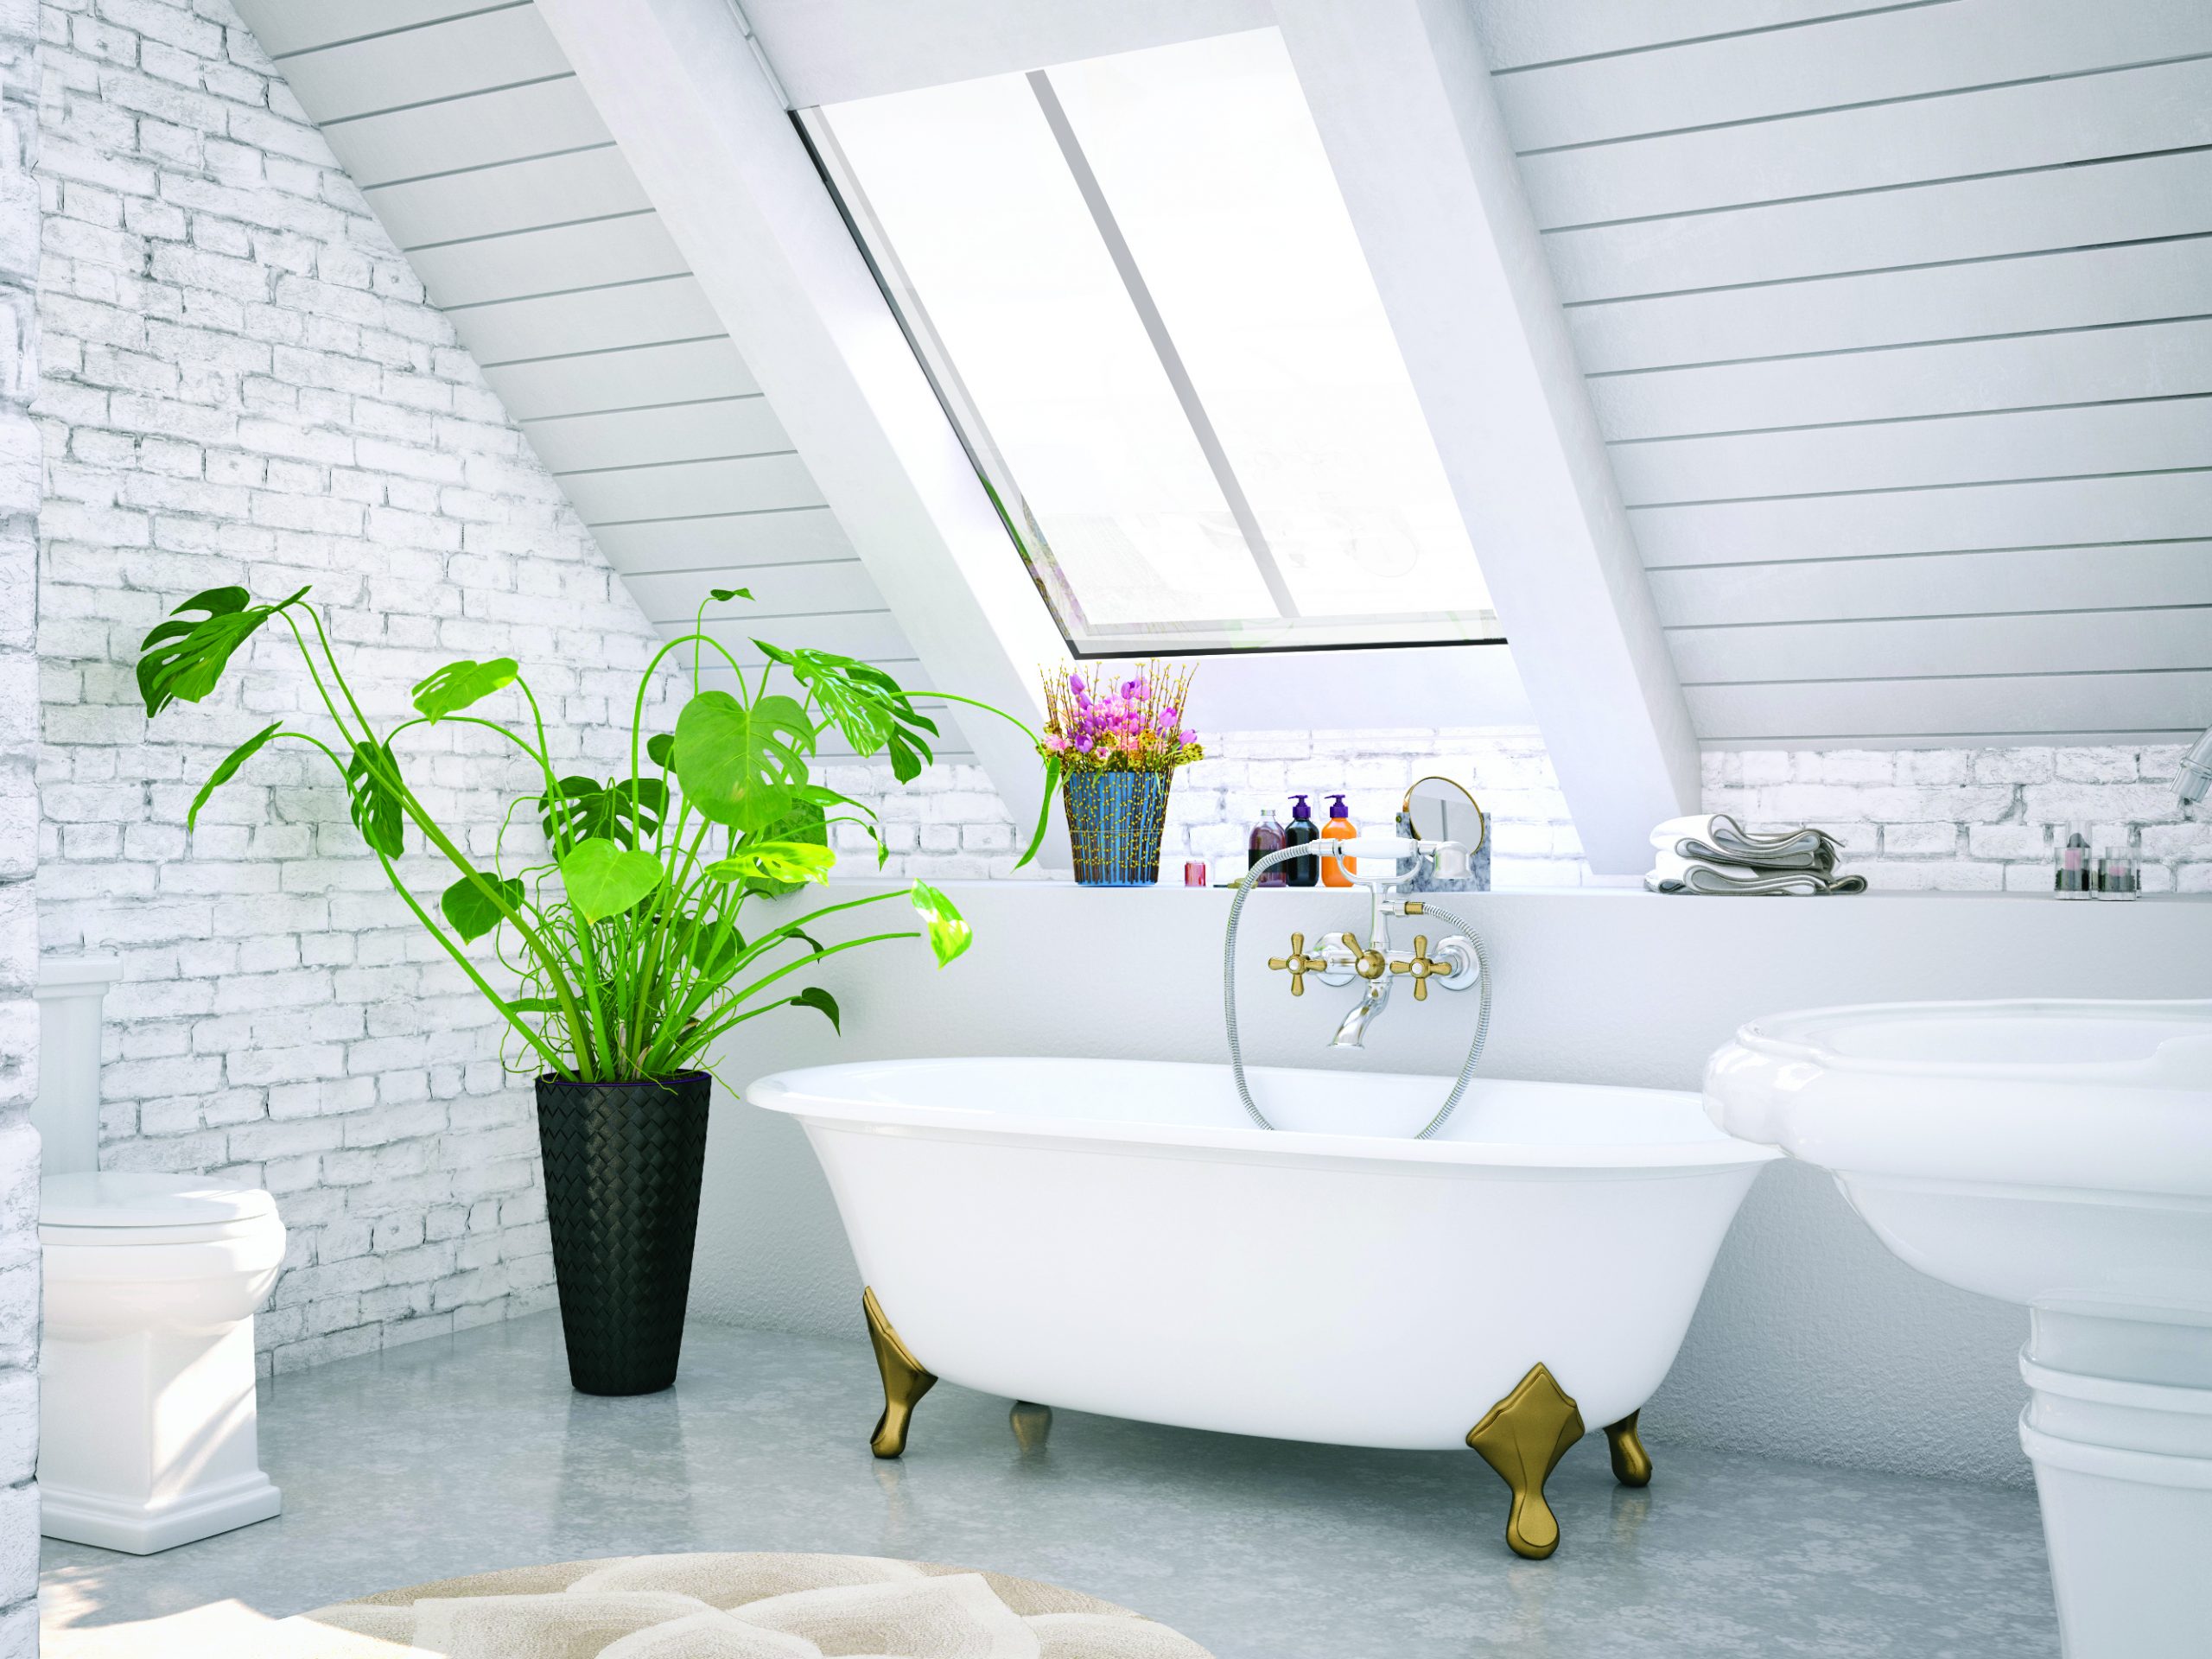 Loft bath with cozy design